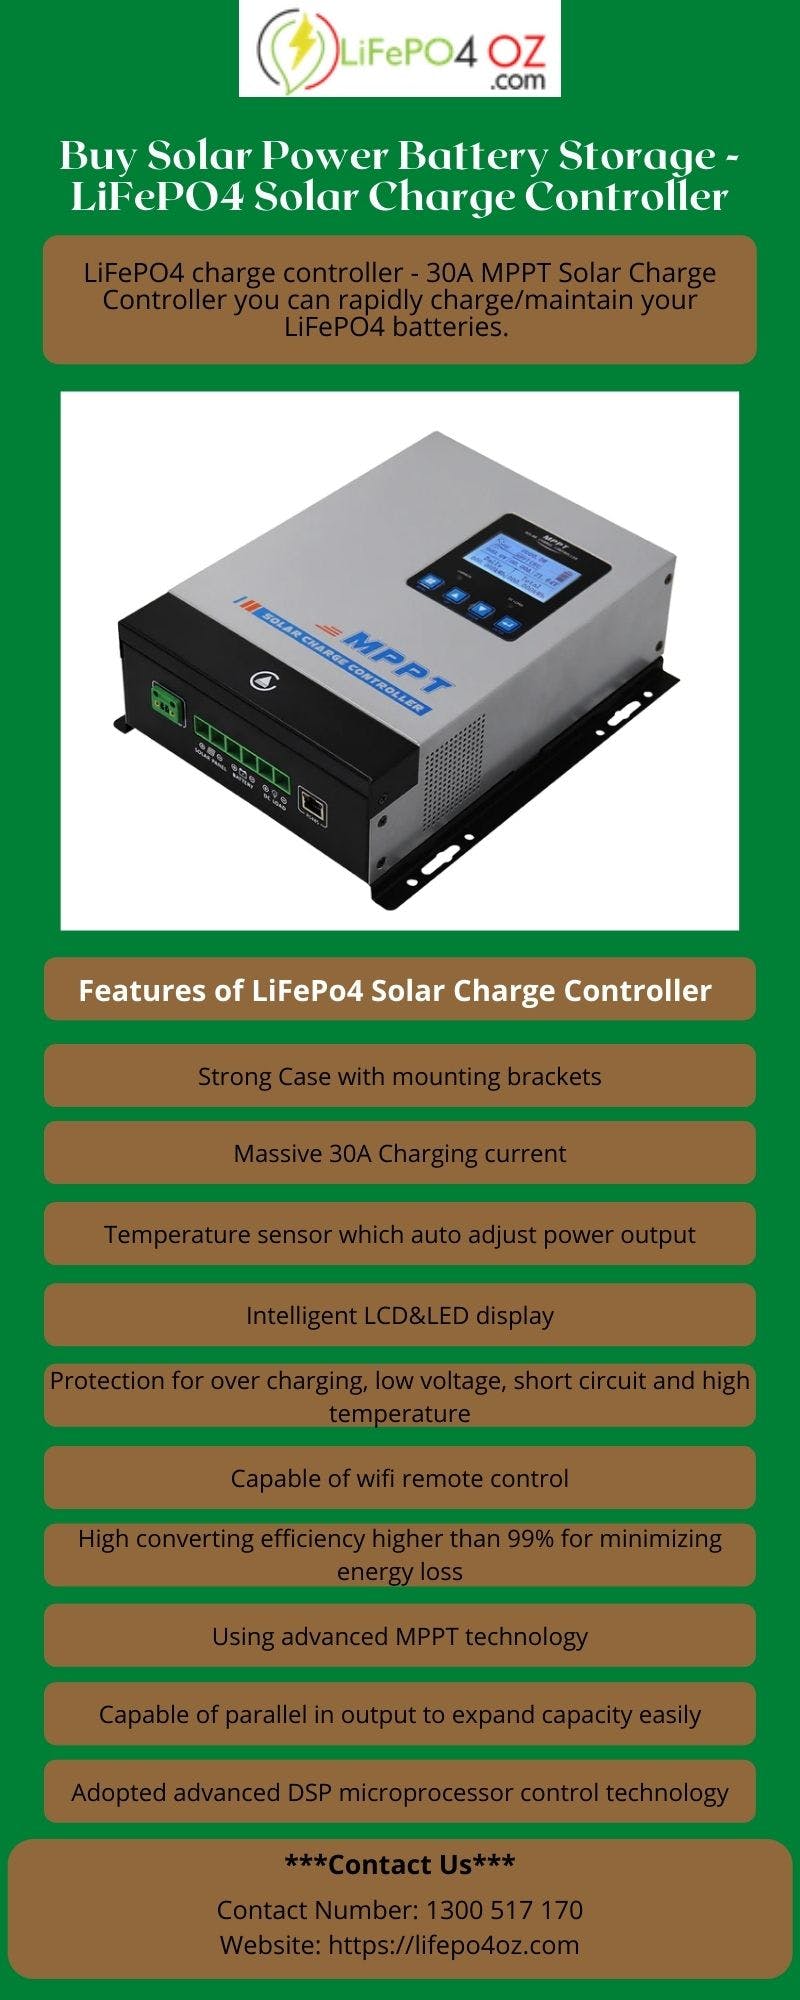 Buy Solar Power Battery Storage - LiFePO4 Solar Charge Controller.jpg